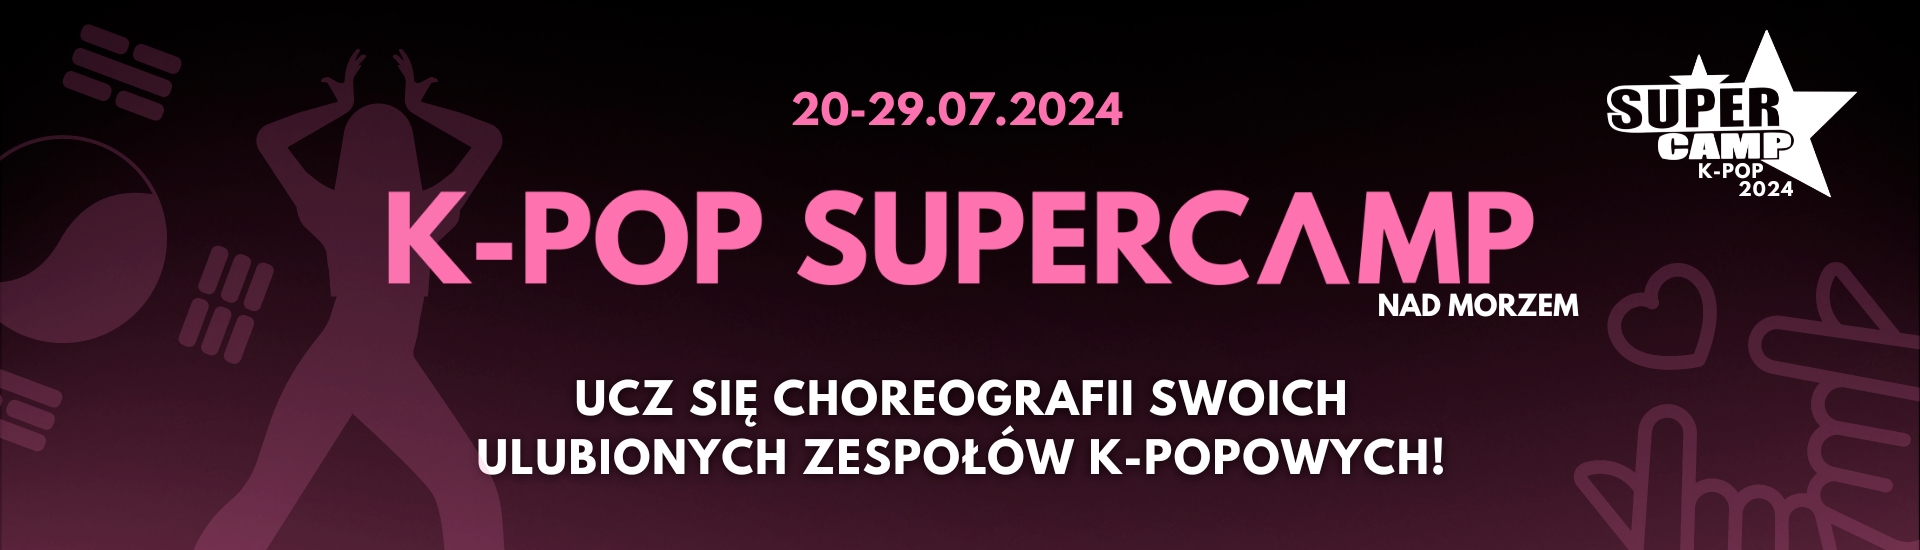 SUPERCAMP-Banery-dobry-rozmiar-na-strone-glowna-supercamo-org-pl-13-